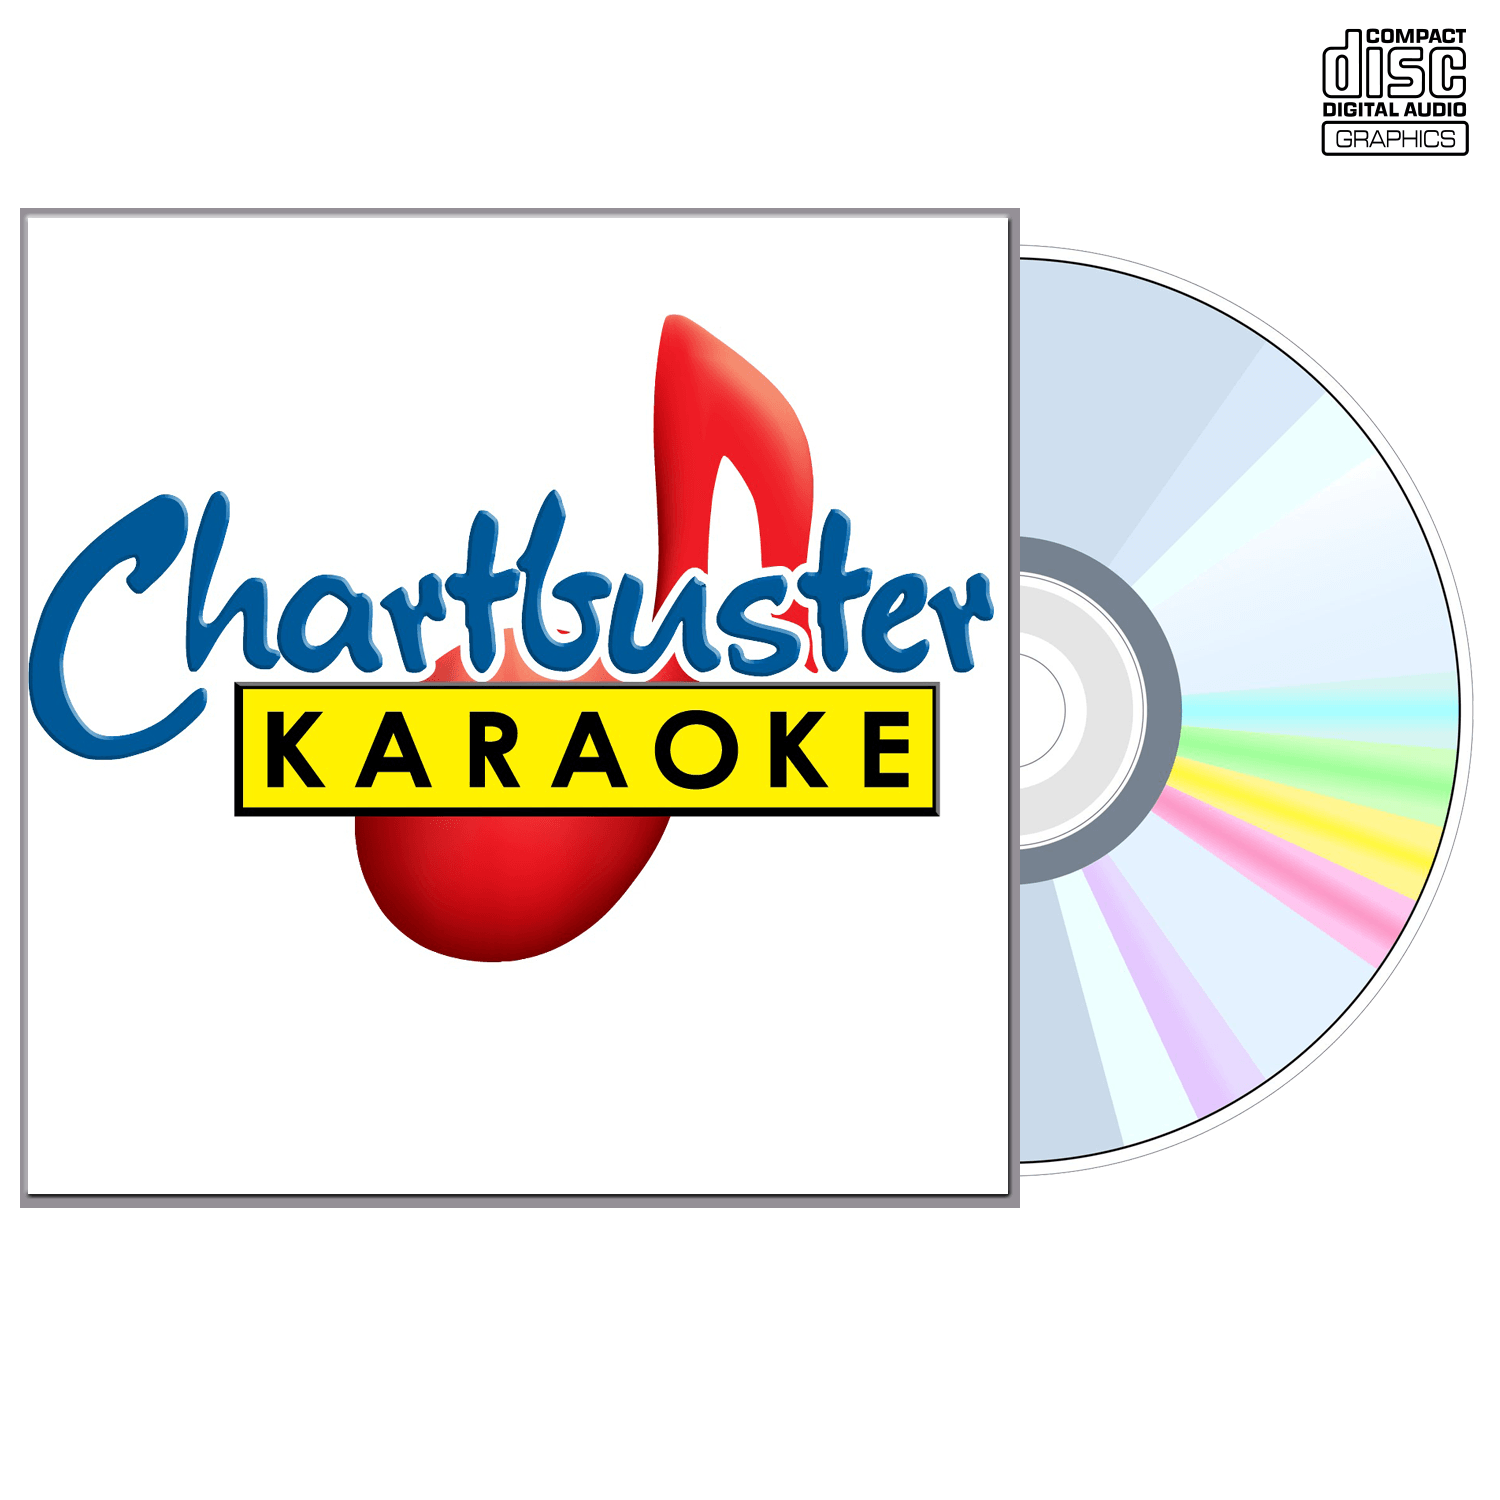 Waylon Jennings Vol 2 - CD+G - Chartbuster Karaoke - Karaoke Home Entertainment